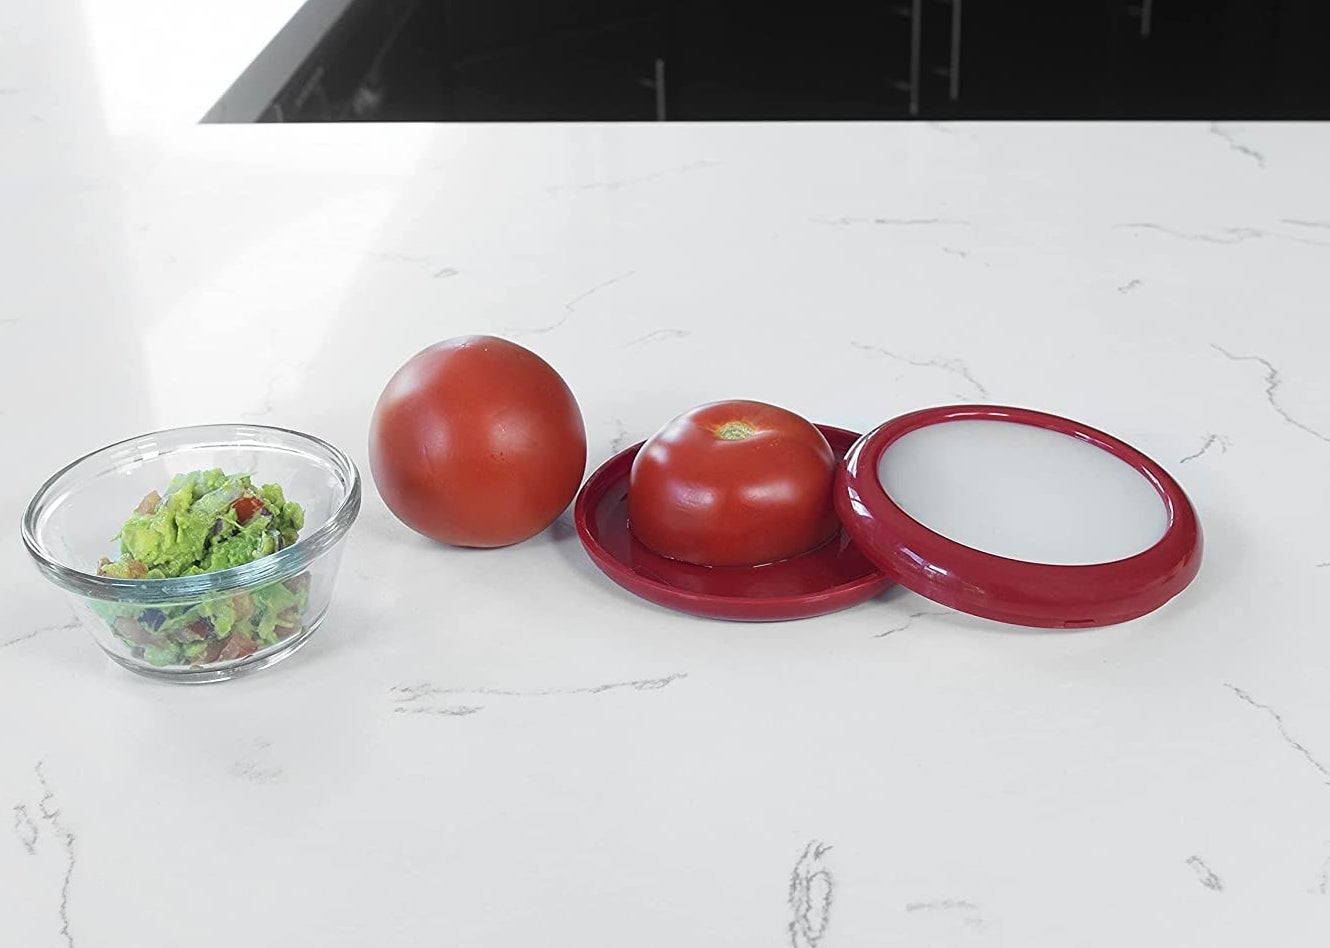 The tomato saver on a counter next to a bowl of guacamole